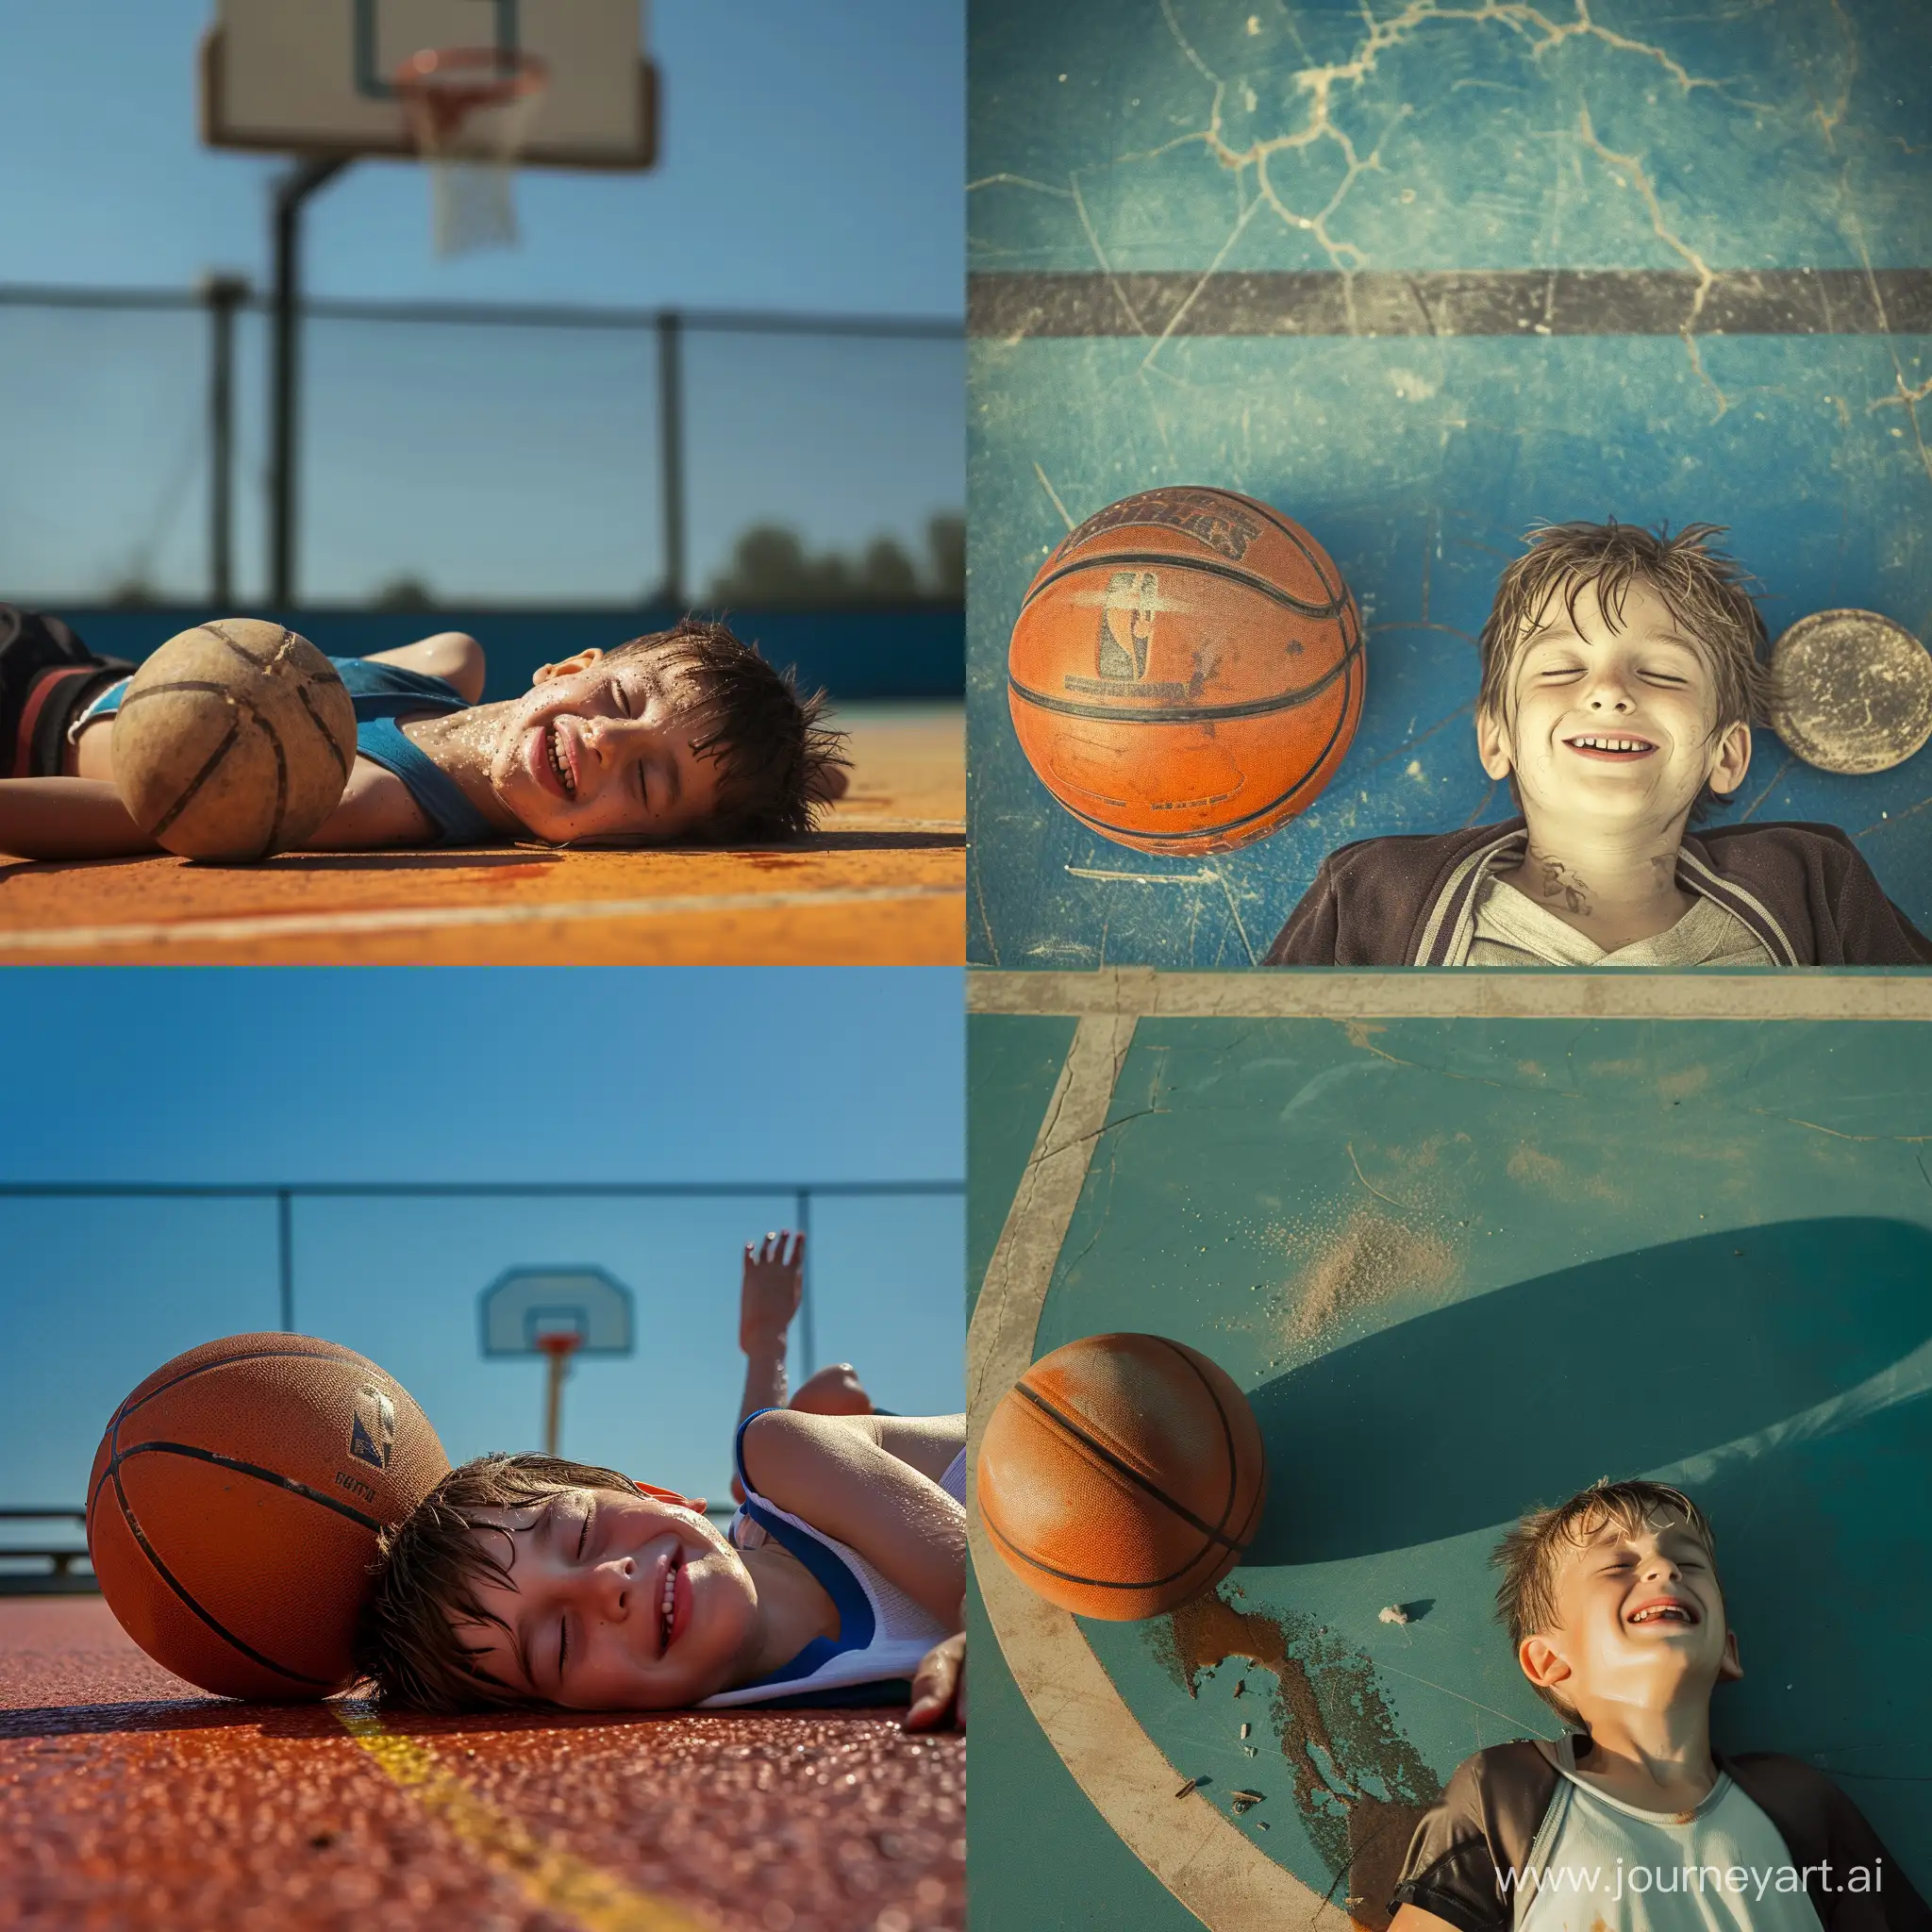 Joyful-Boy-on-Basketball-Court-with-Vintage-Ball